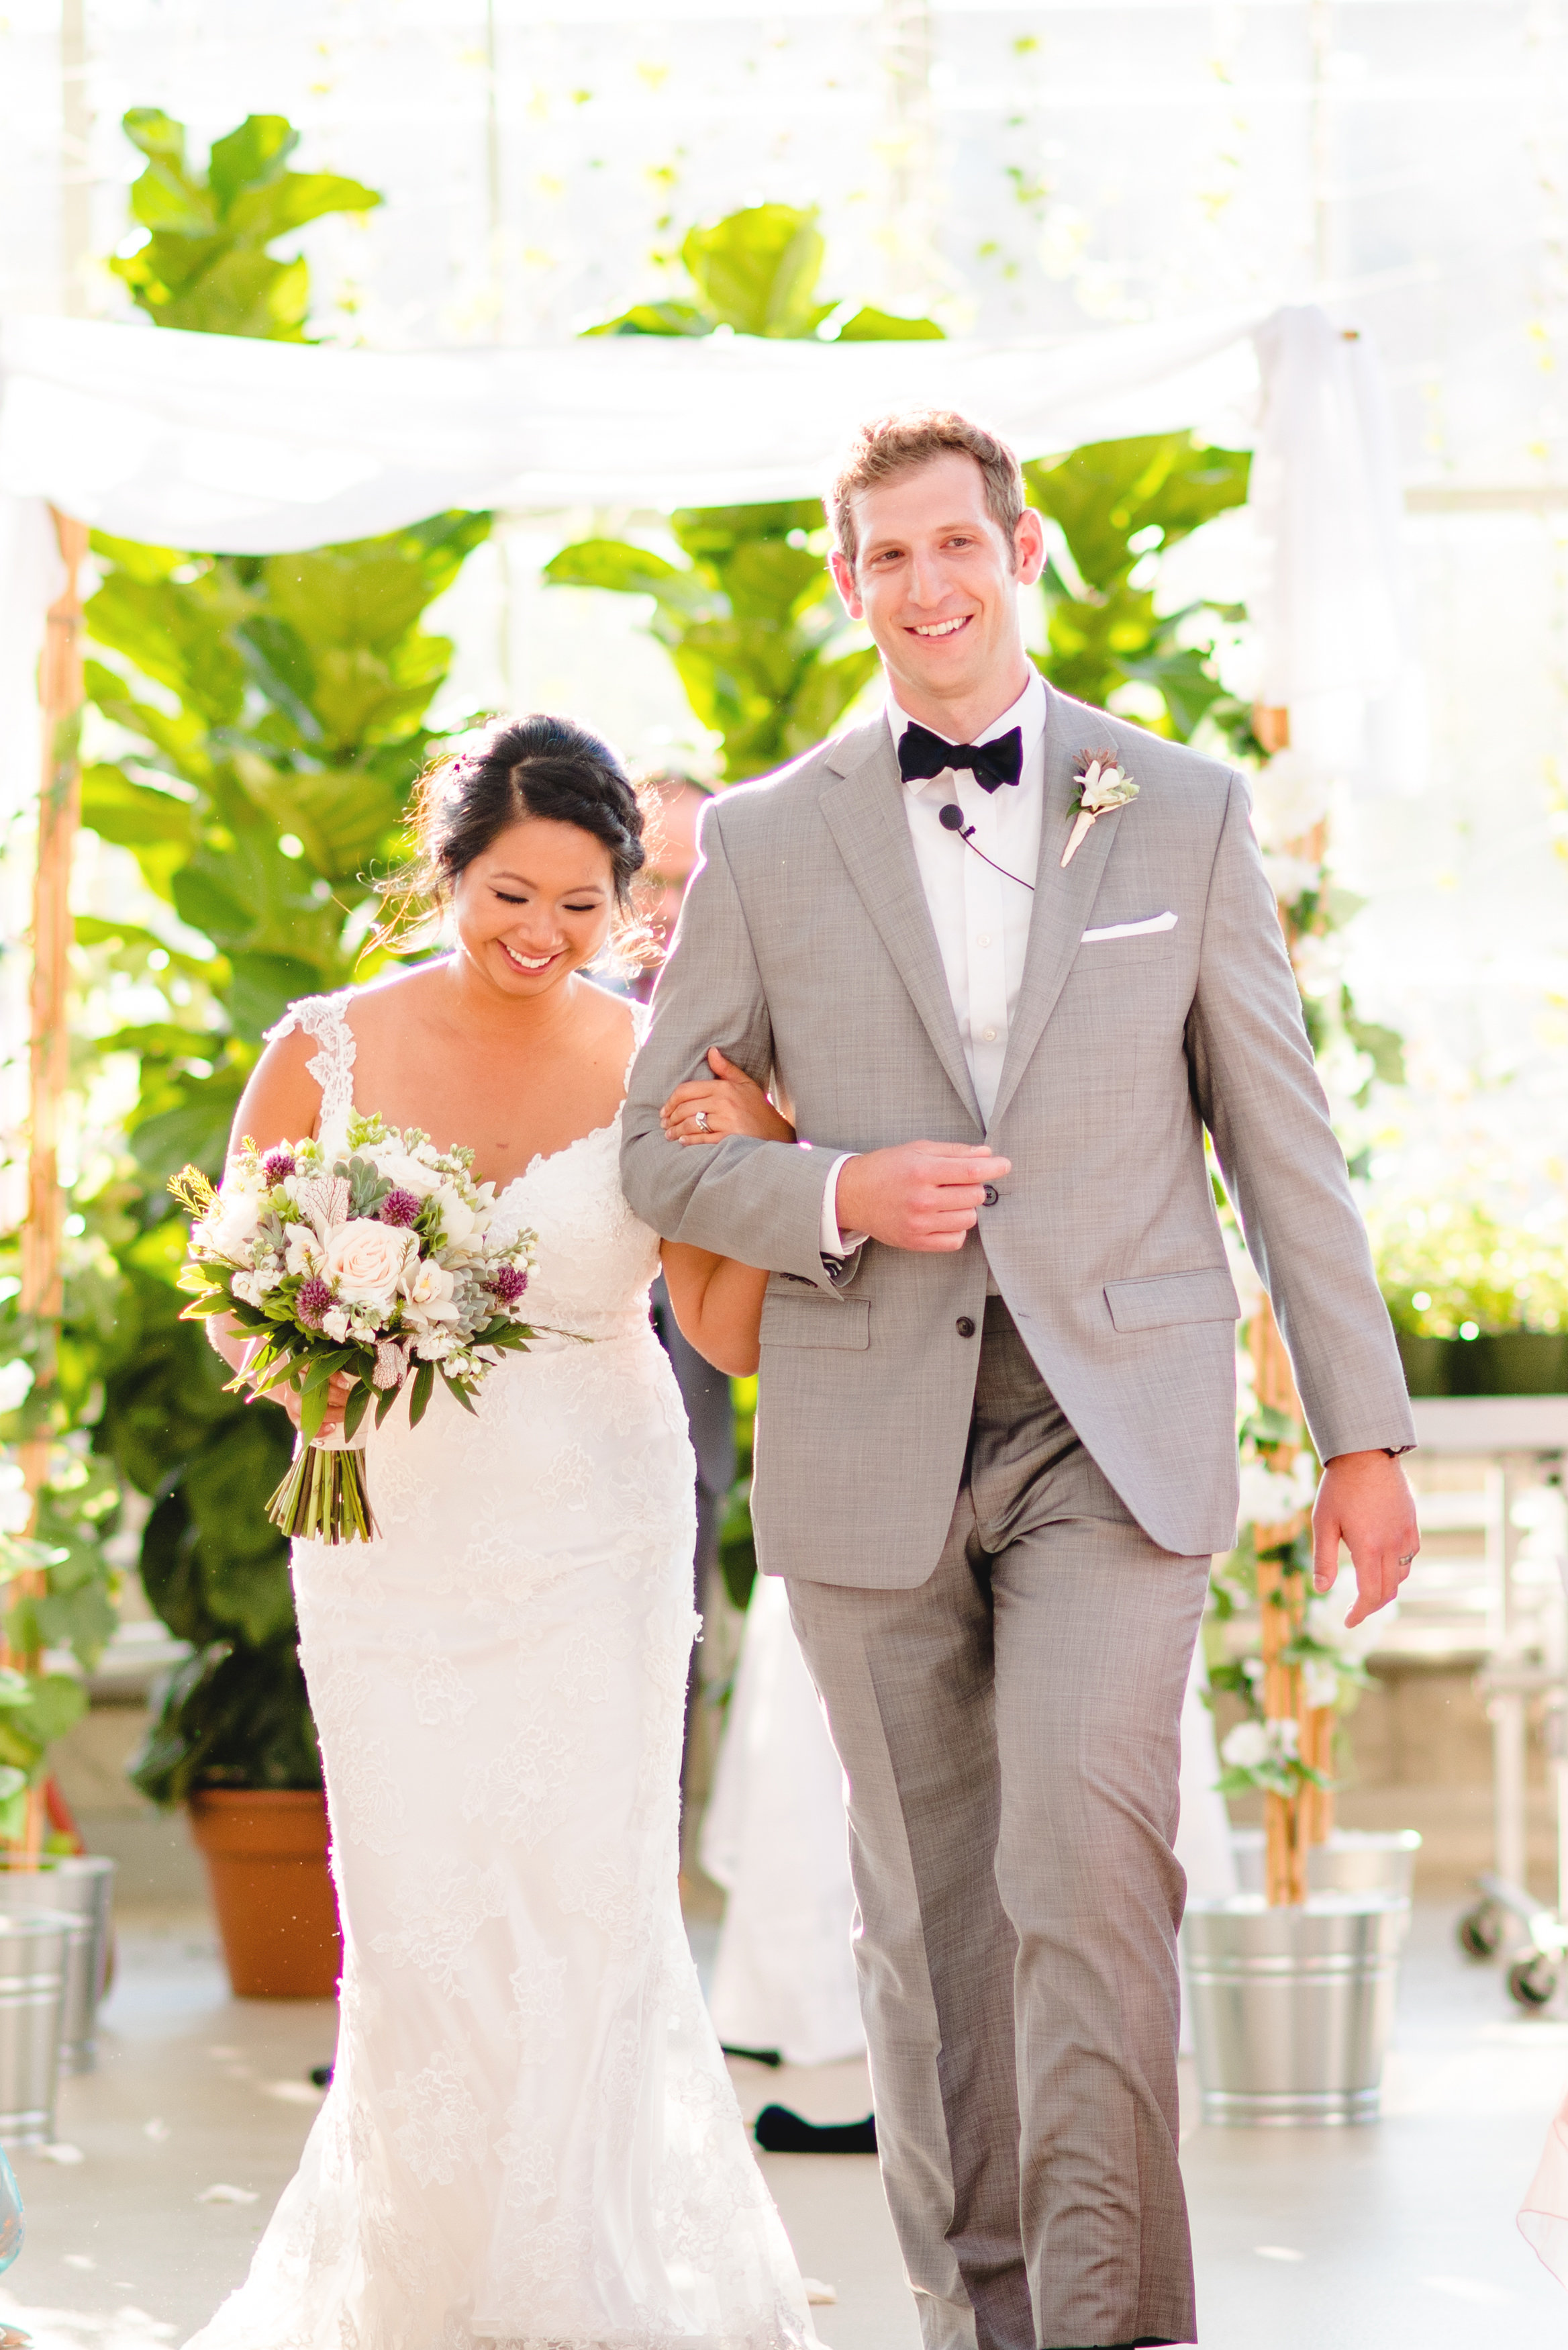 JS Weddings & Events, Grand Rapids Wedding Planner and Floral Designer - Grand Rapids Downtown Market Natural Greenhouse Conservatory Wedding